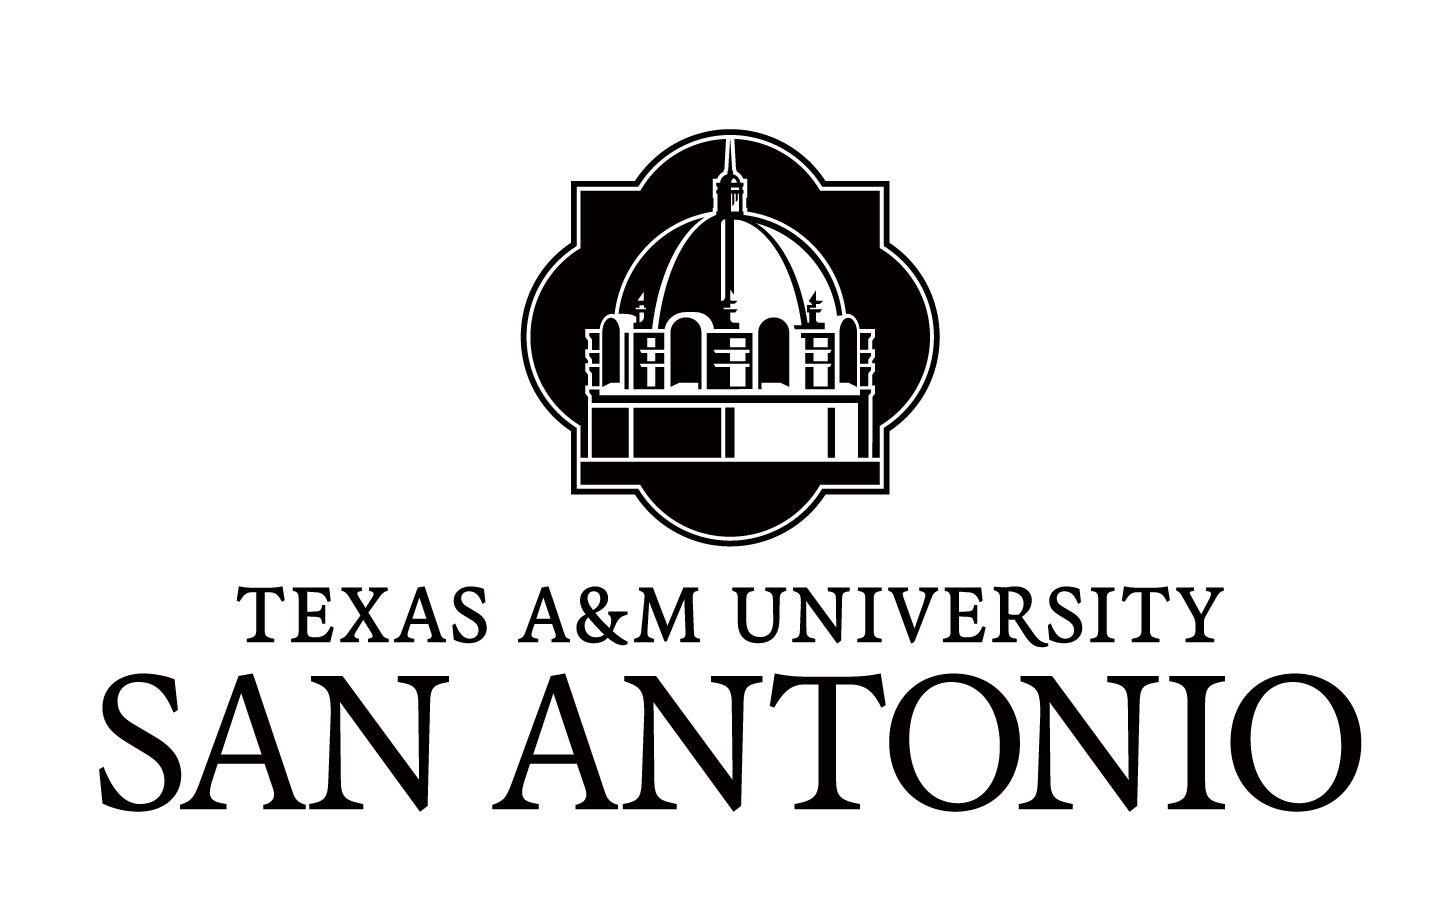 Texas A&M University San Antonio logo